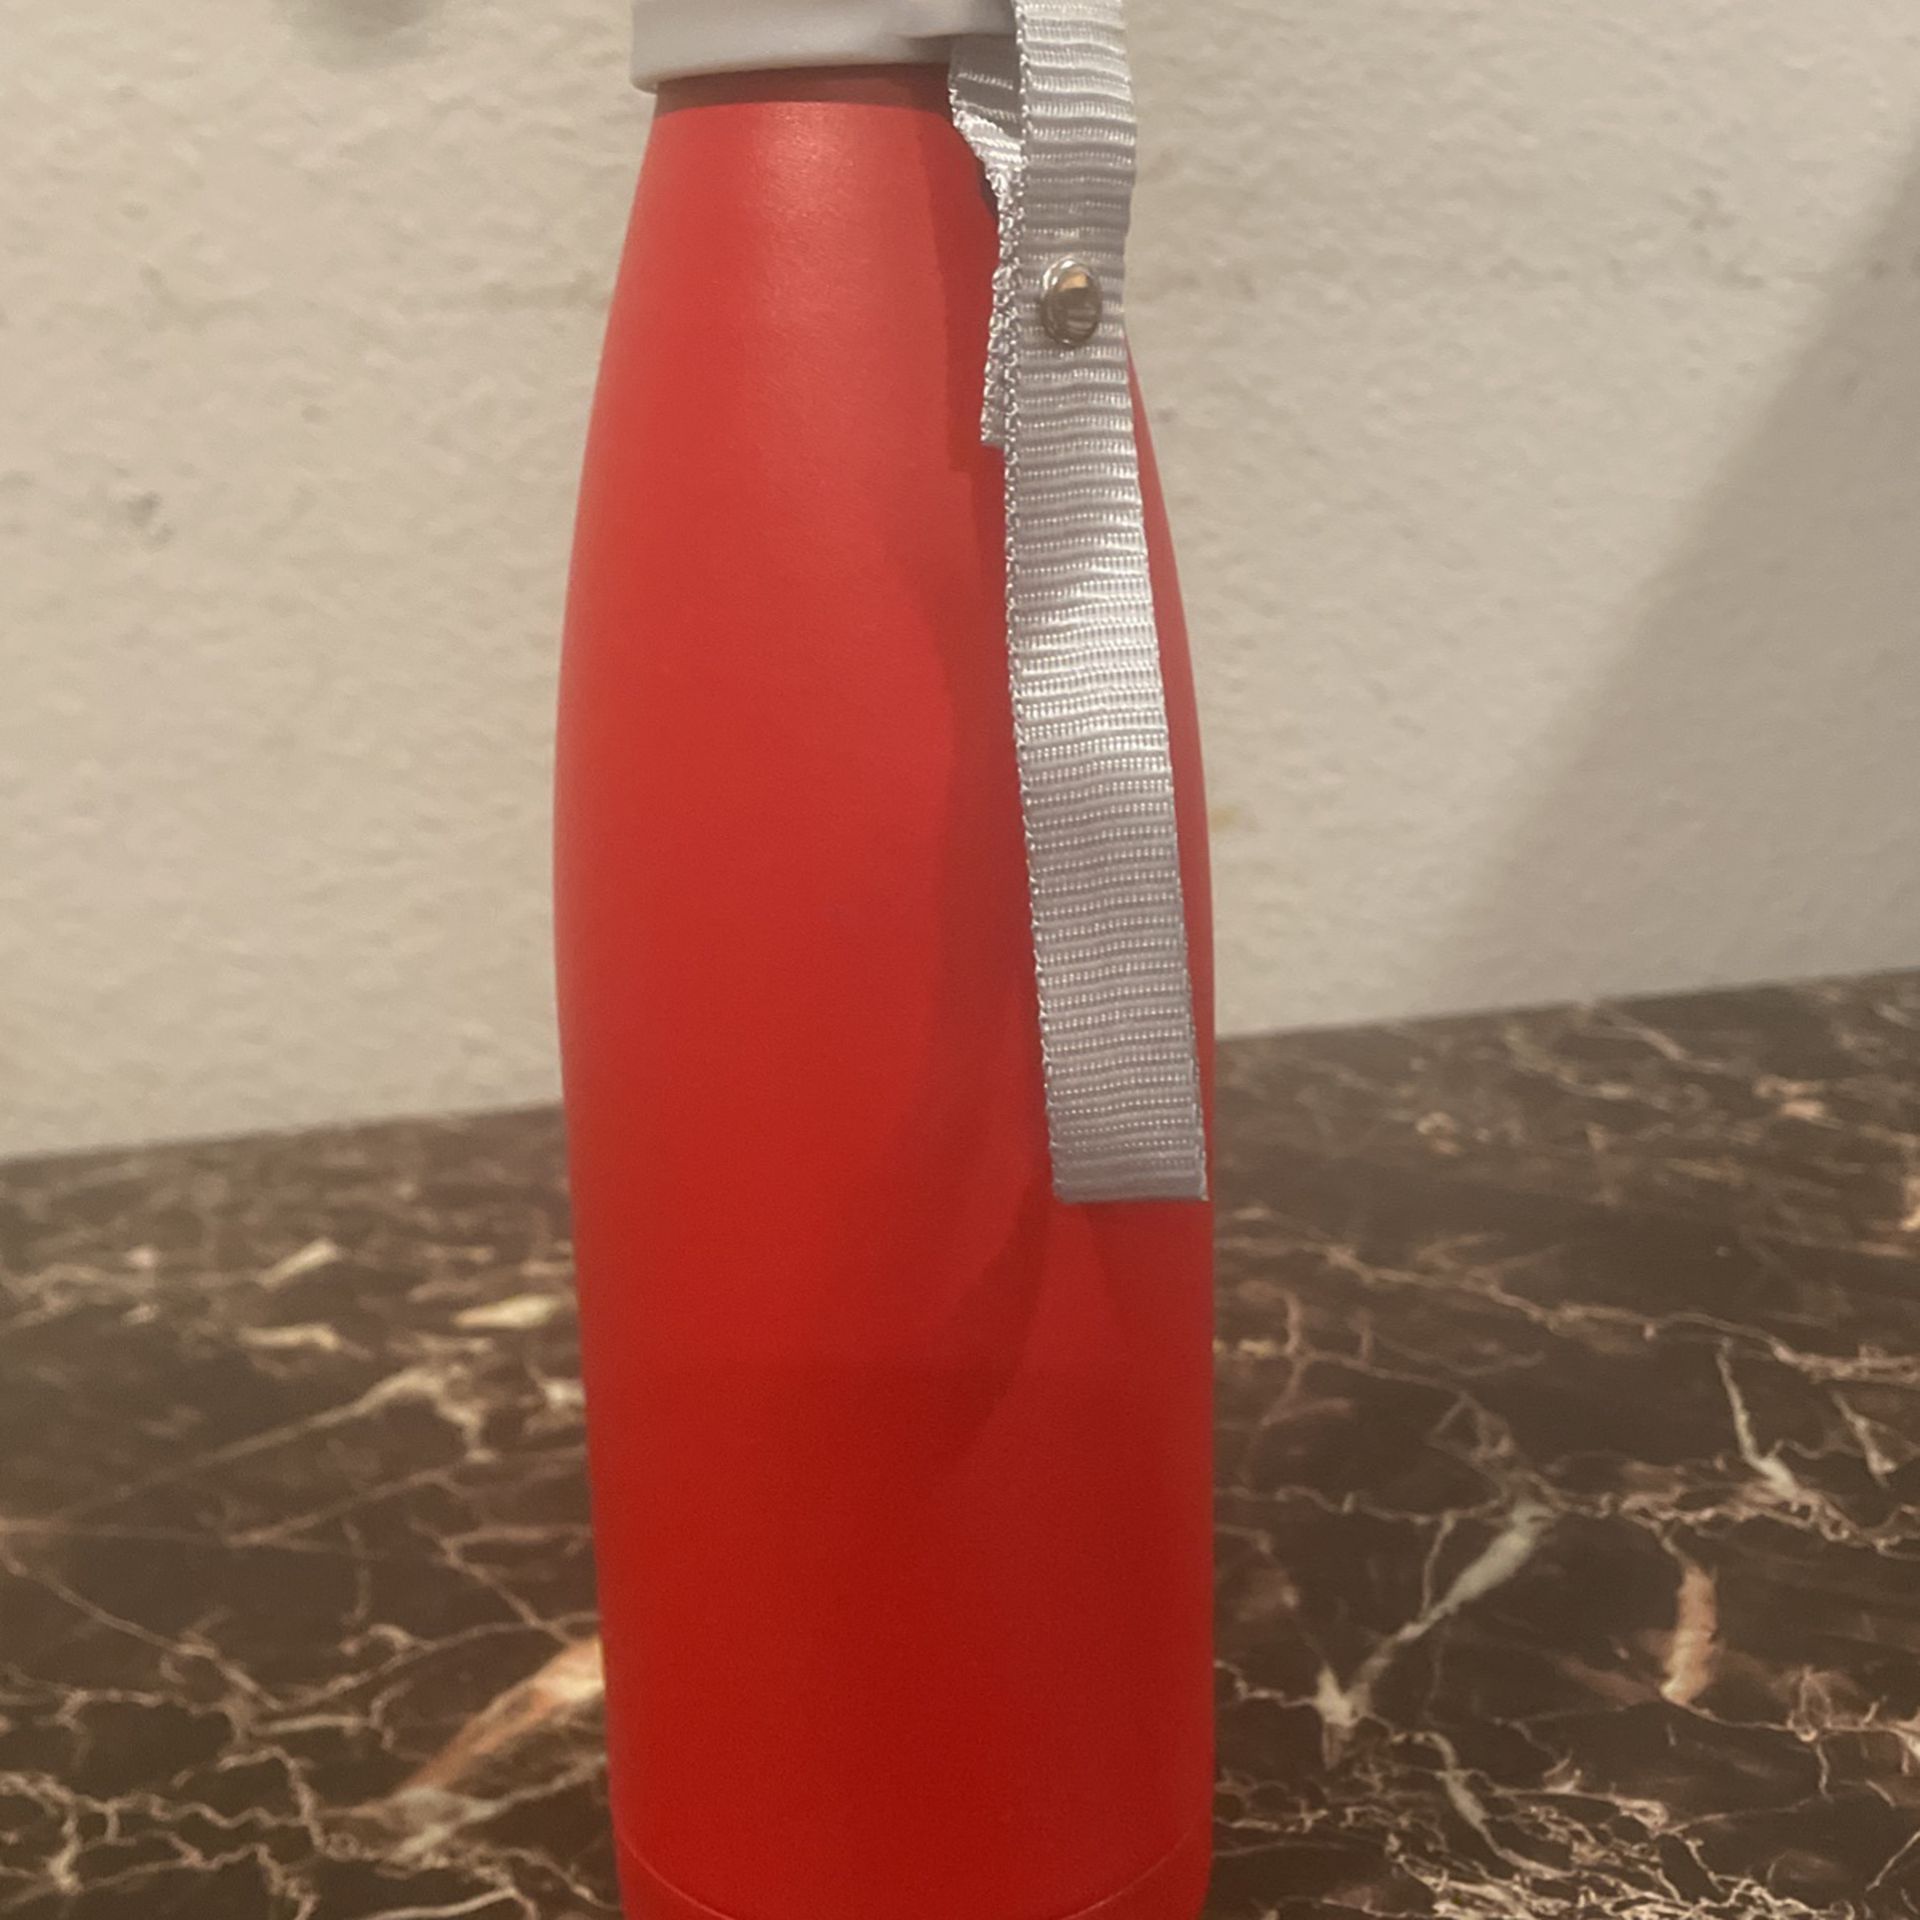 New Owala FreeSip Stainless Steel Water Bottle - Light Purple 24 Oz for  Sale in Peoria, AZ - OfferUp